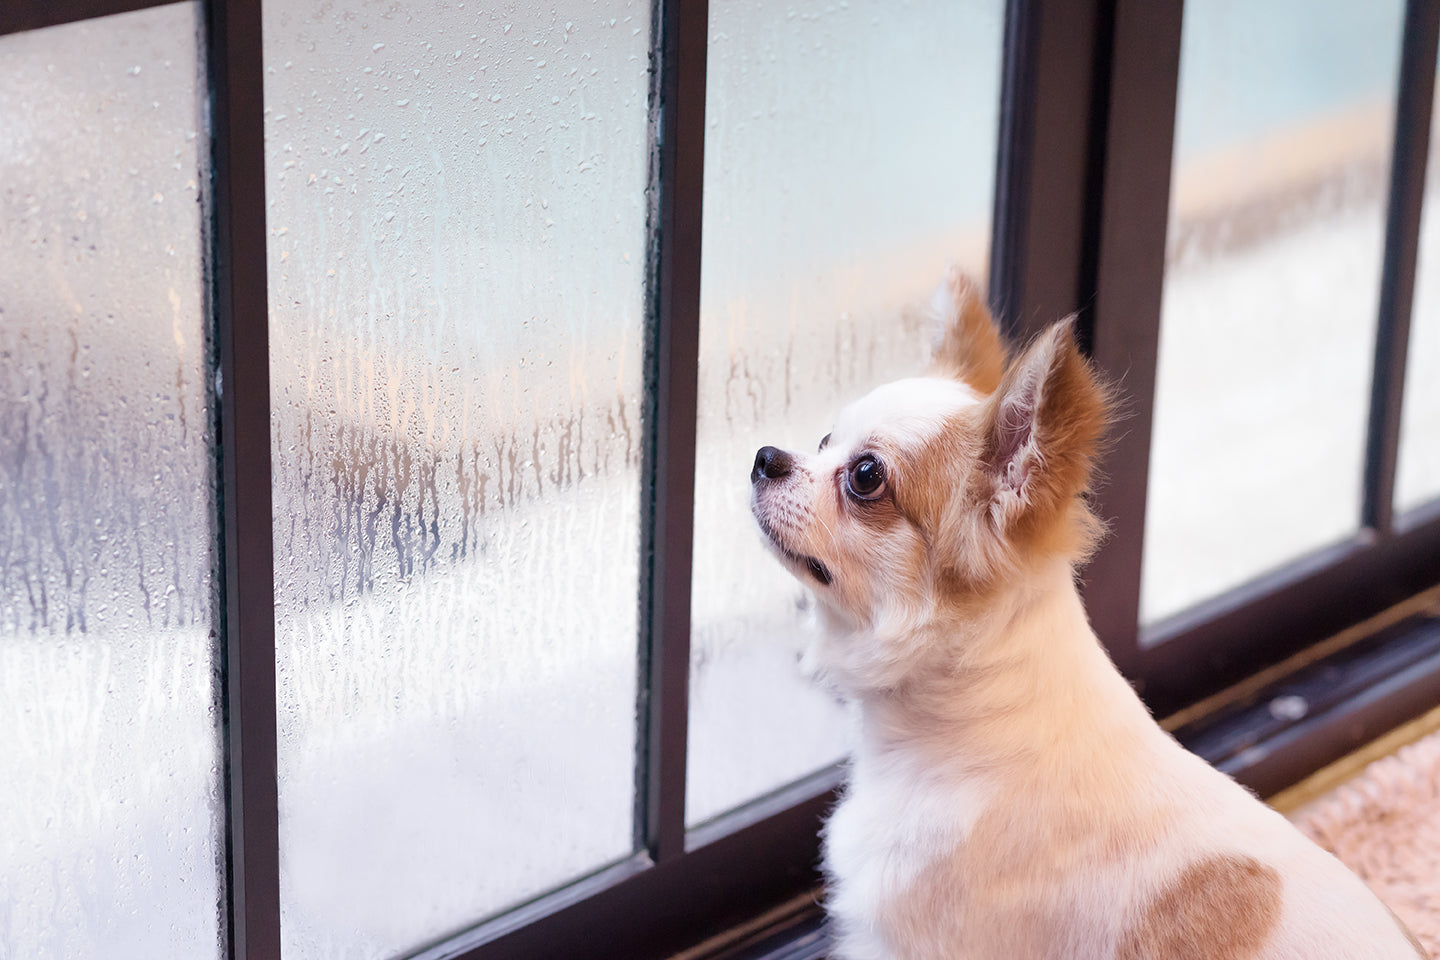 7 Indoor Dog Enrichment Ideas for Rainy Days